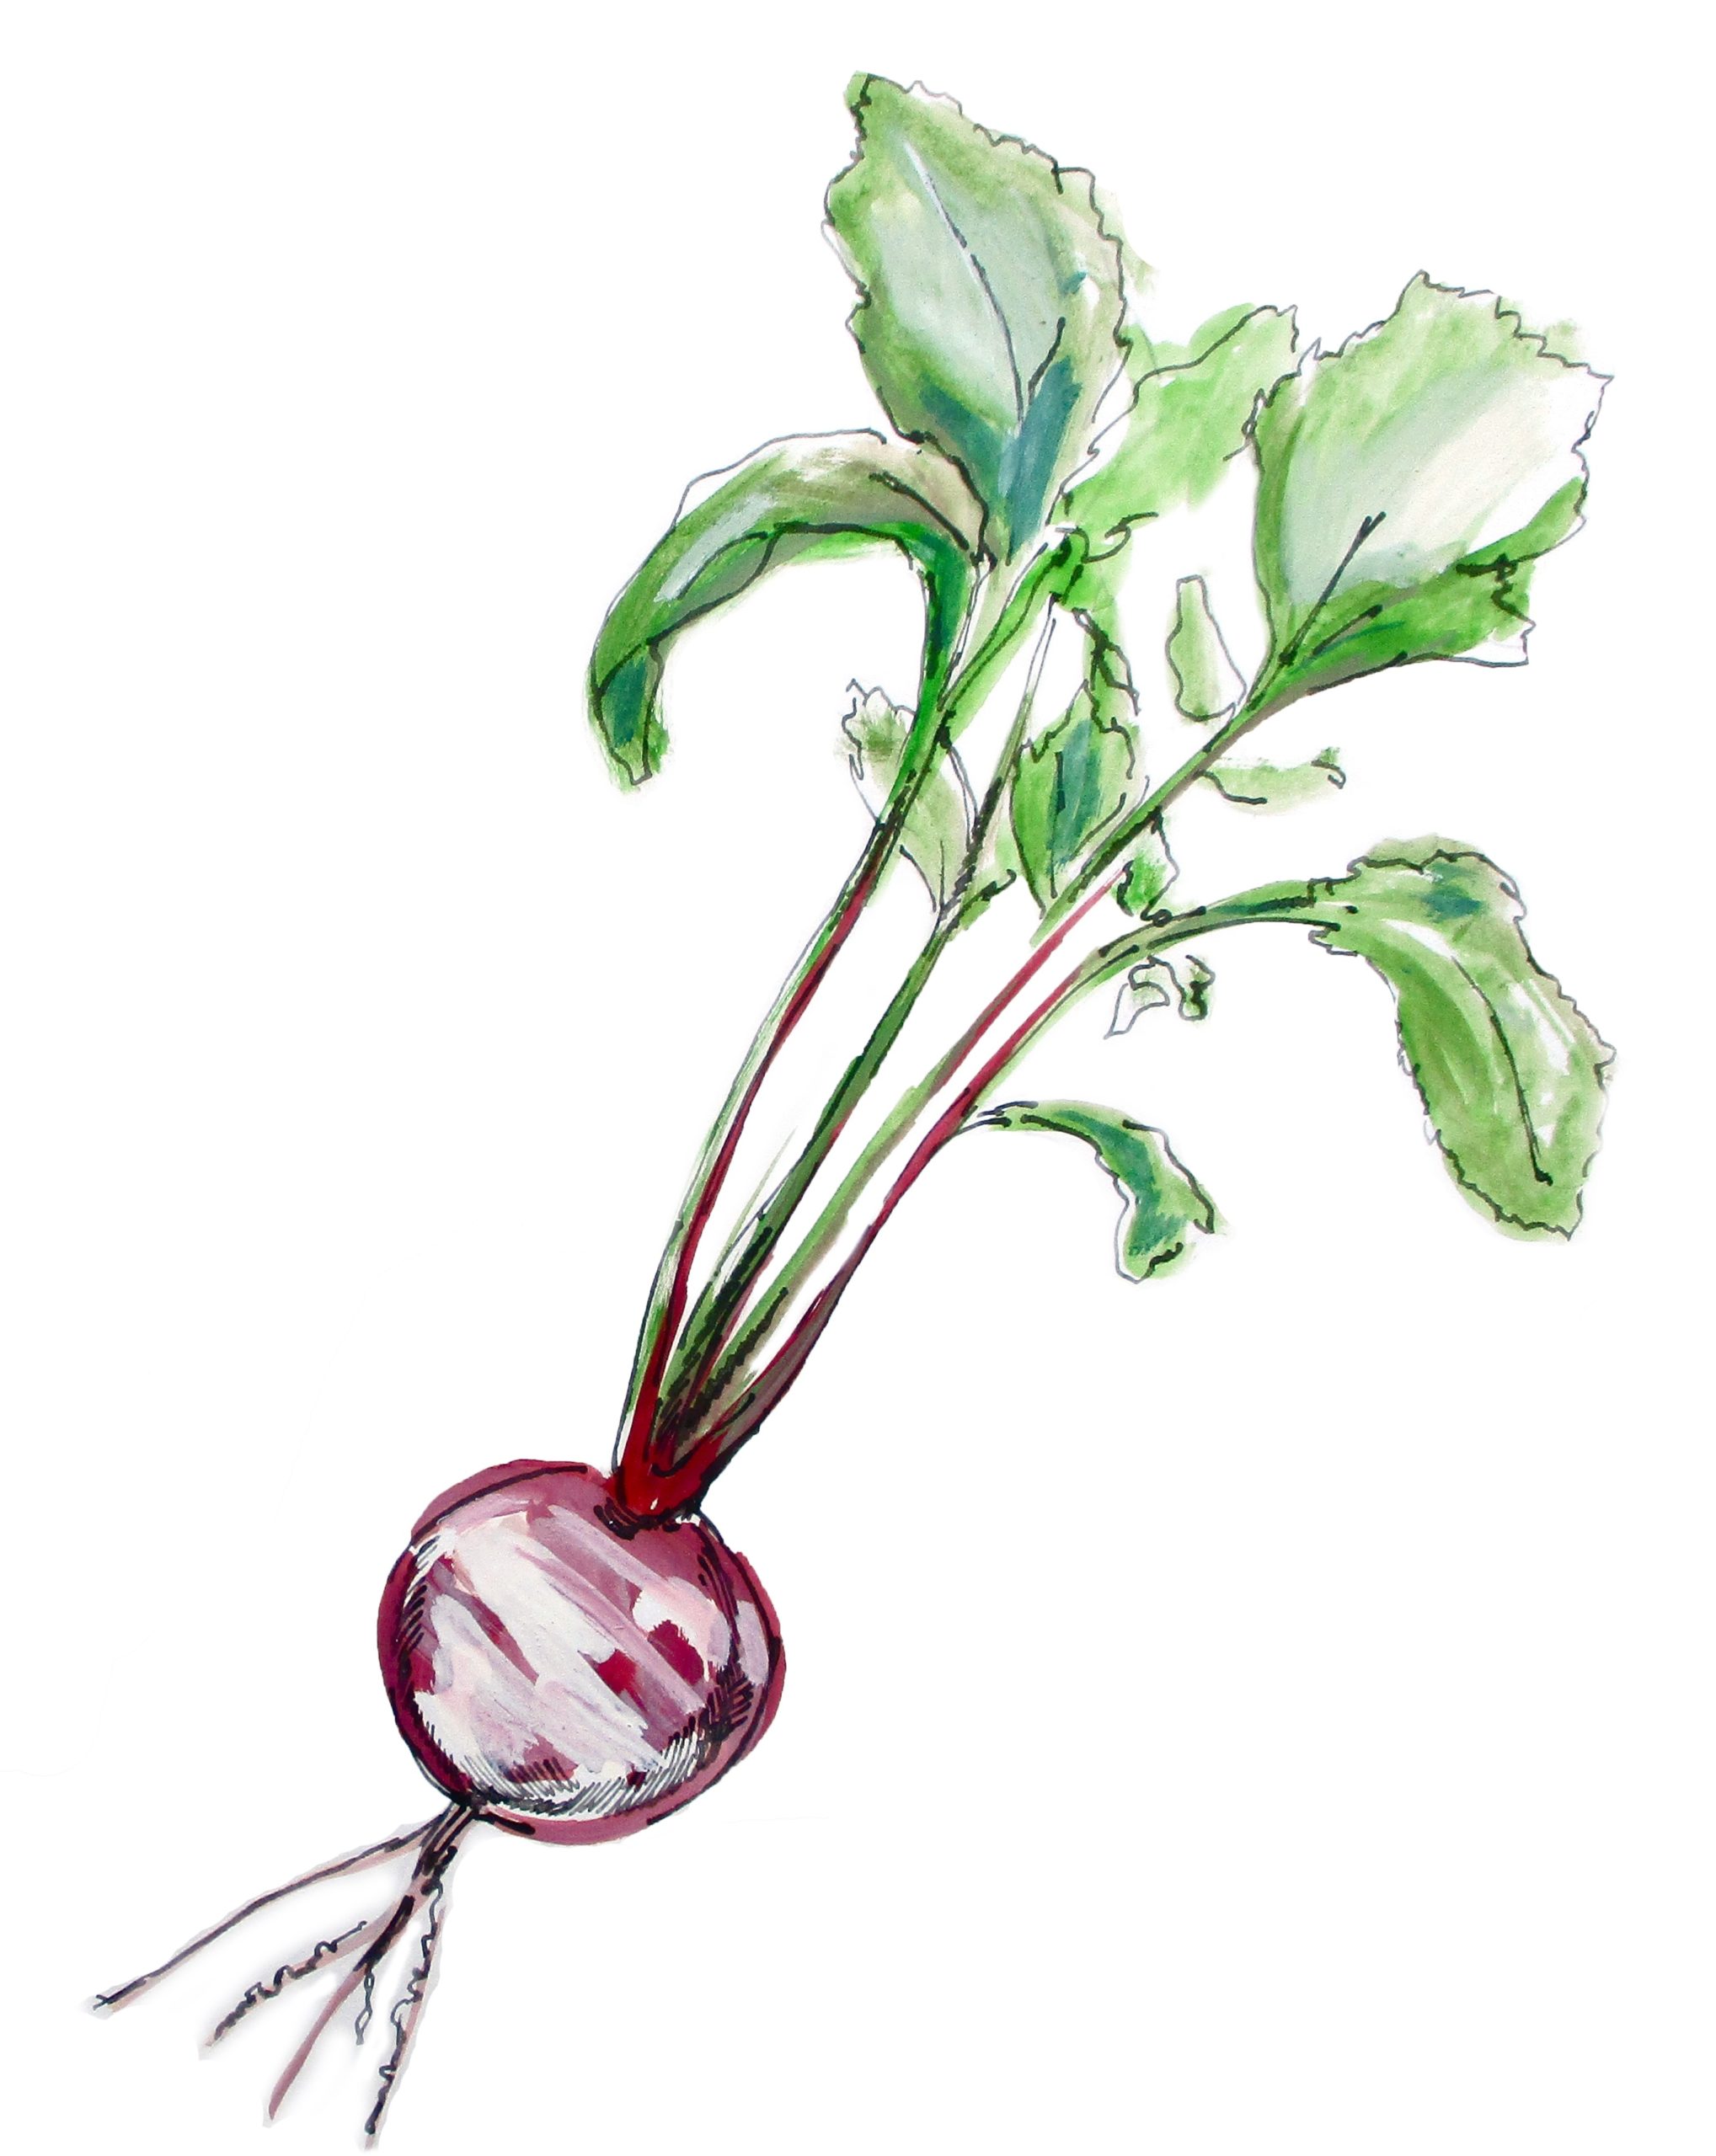 HOM_Illustration_Brassicas_Turnip